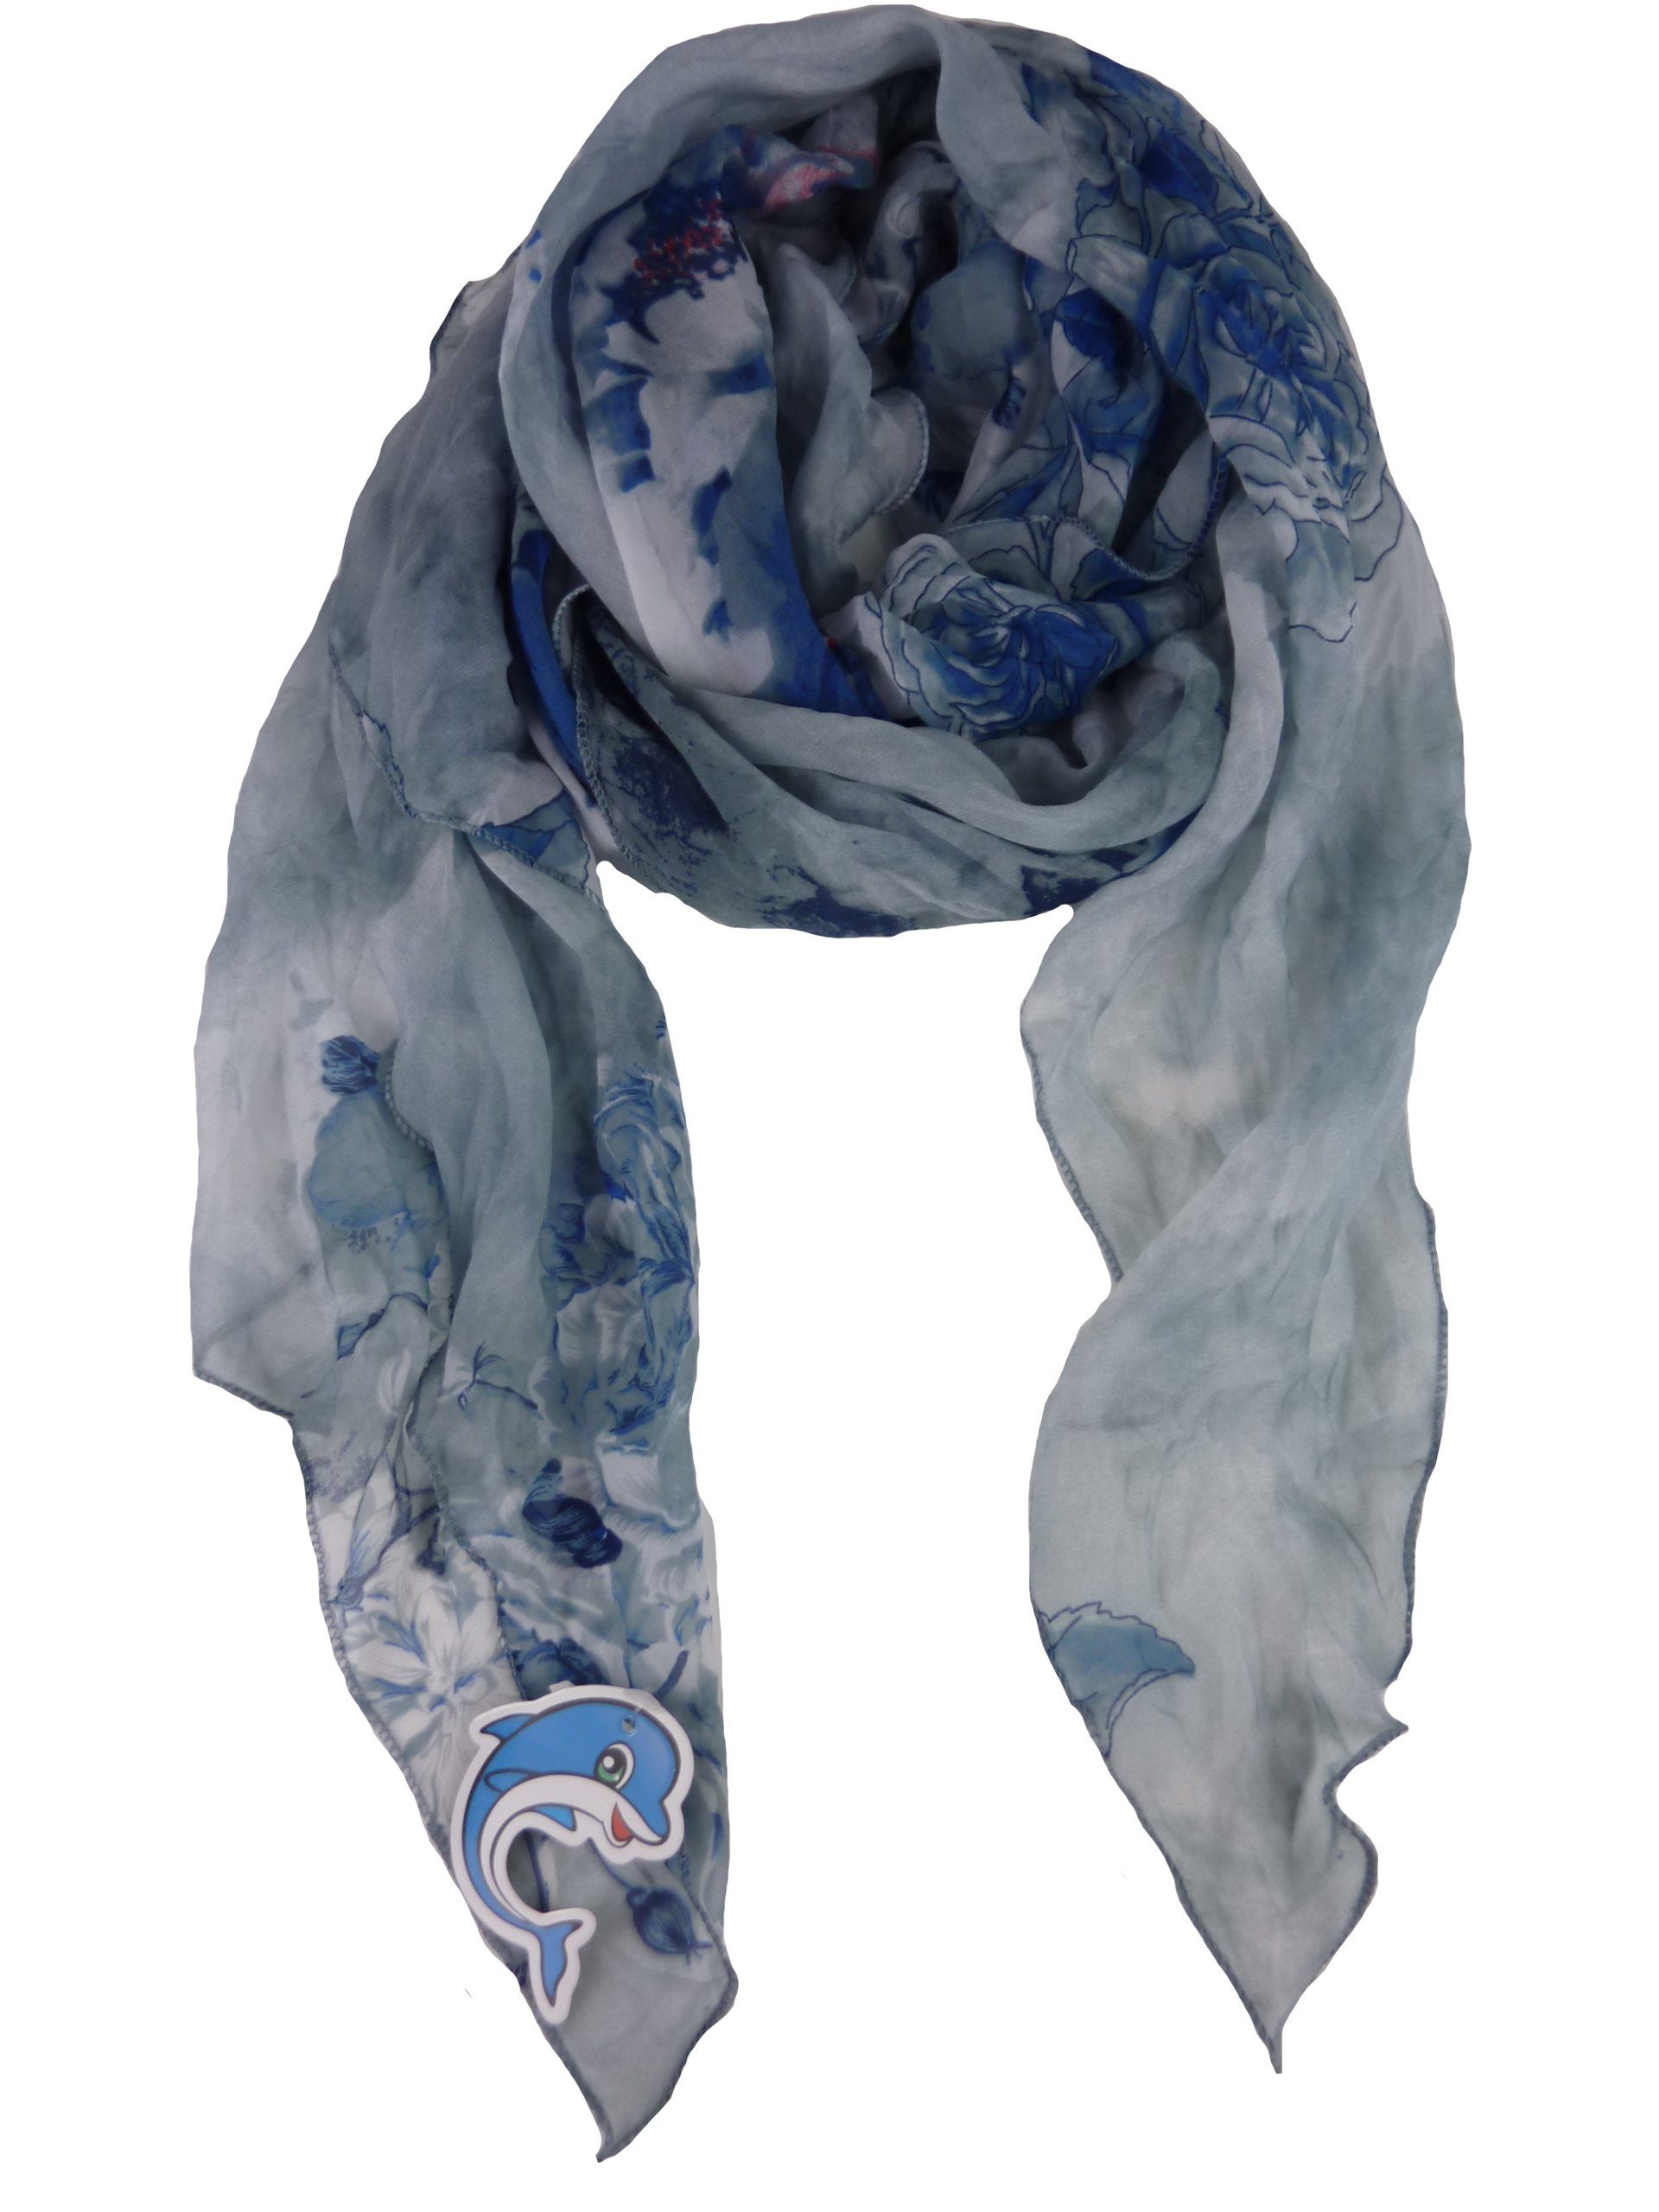 Taschen4life Schal Damen Schal QS-05-XJ, Blumen Muster, Tuch gemustert mehrfarbig blau/grau | Modeschals